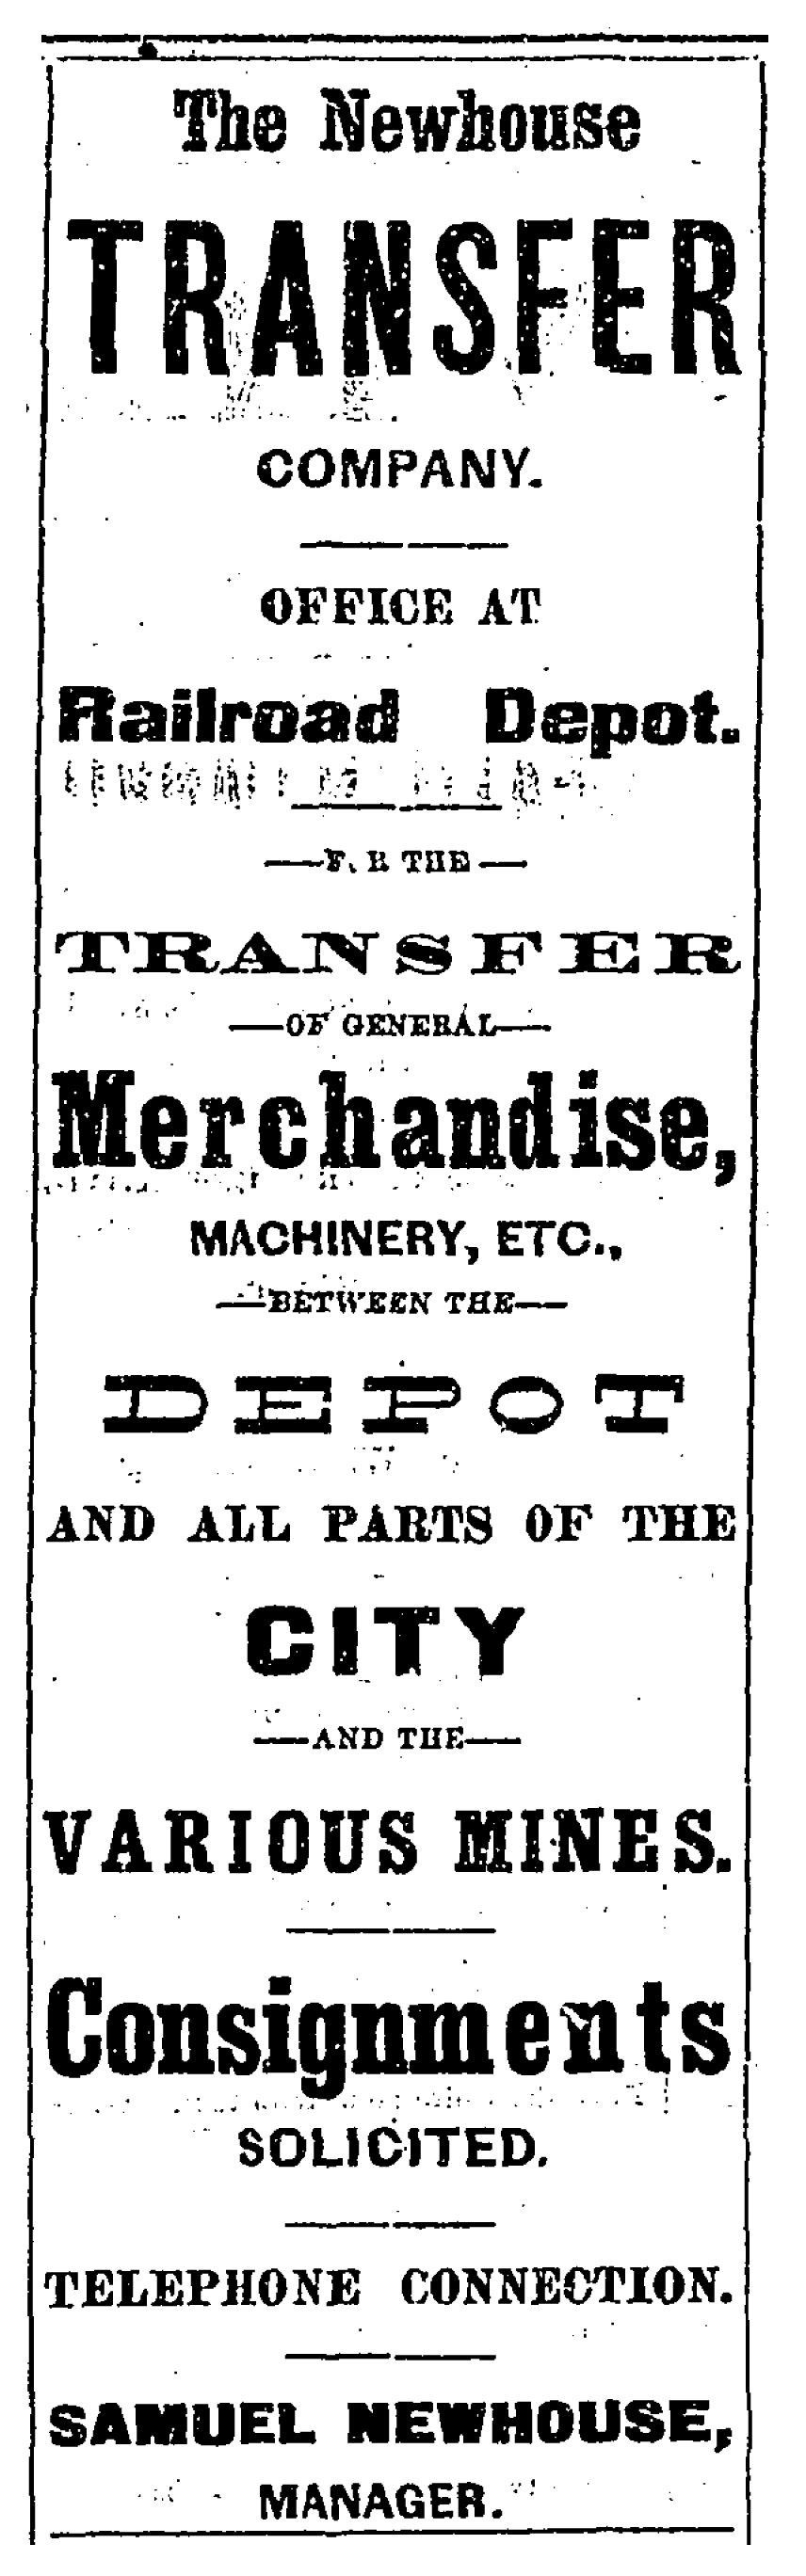 The Leadville Herald, February 16, 1884